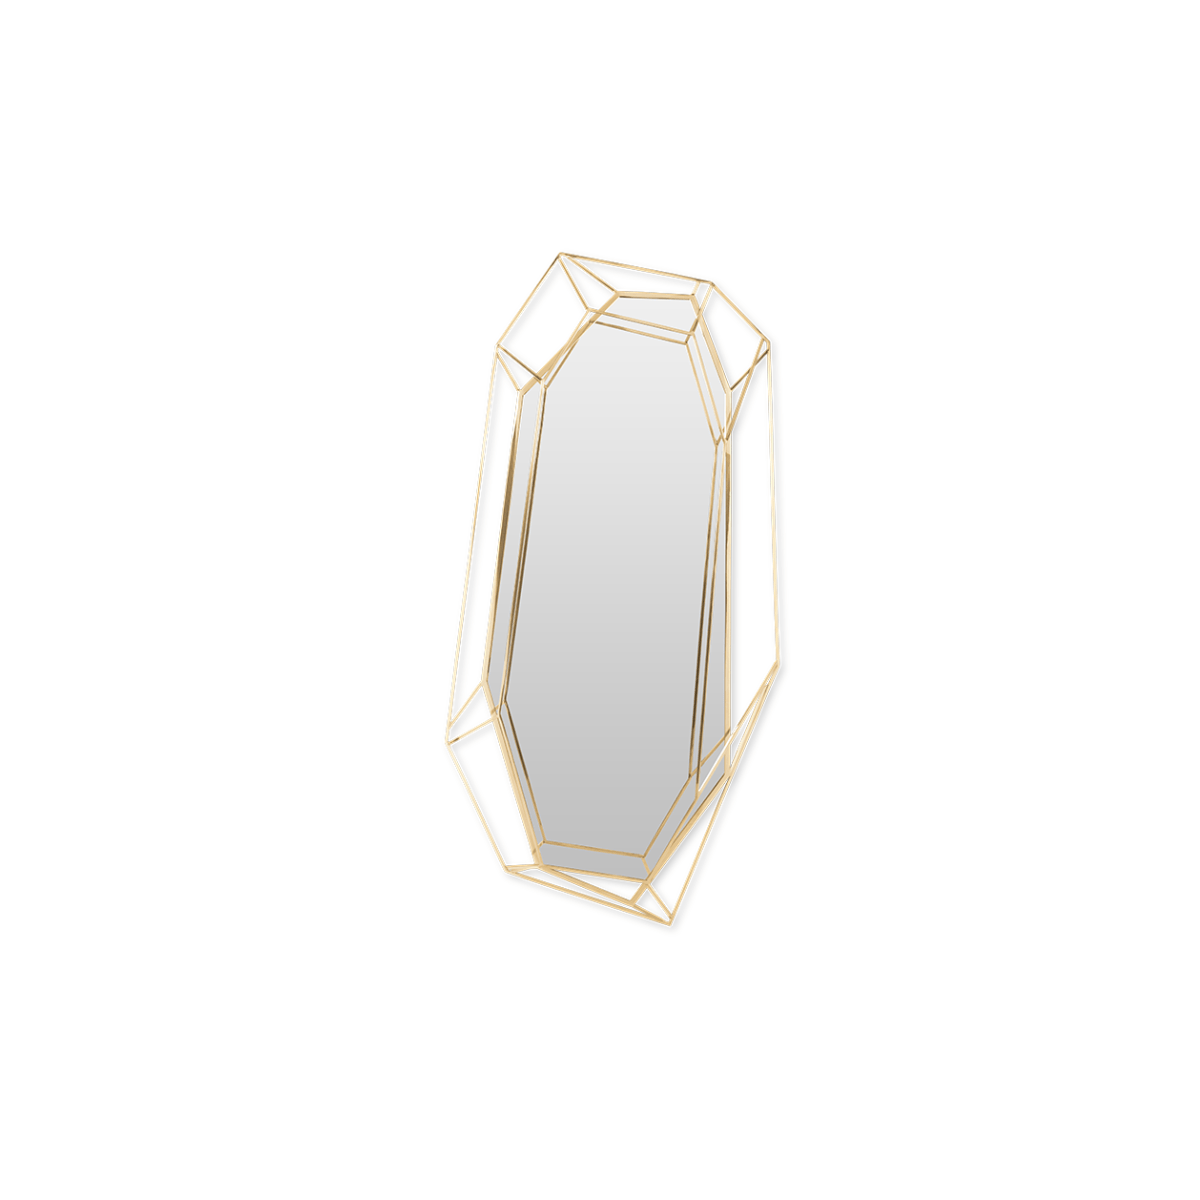 diamond-big-mirror-essential-home